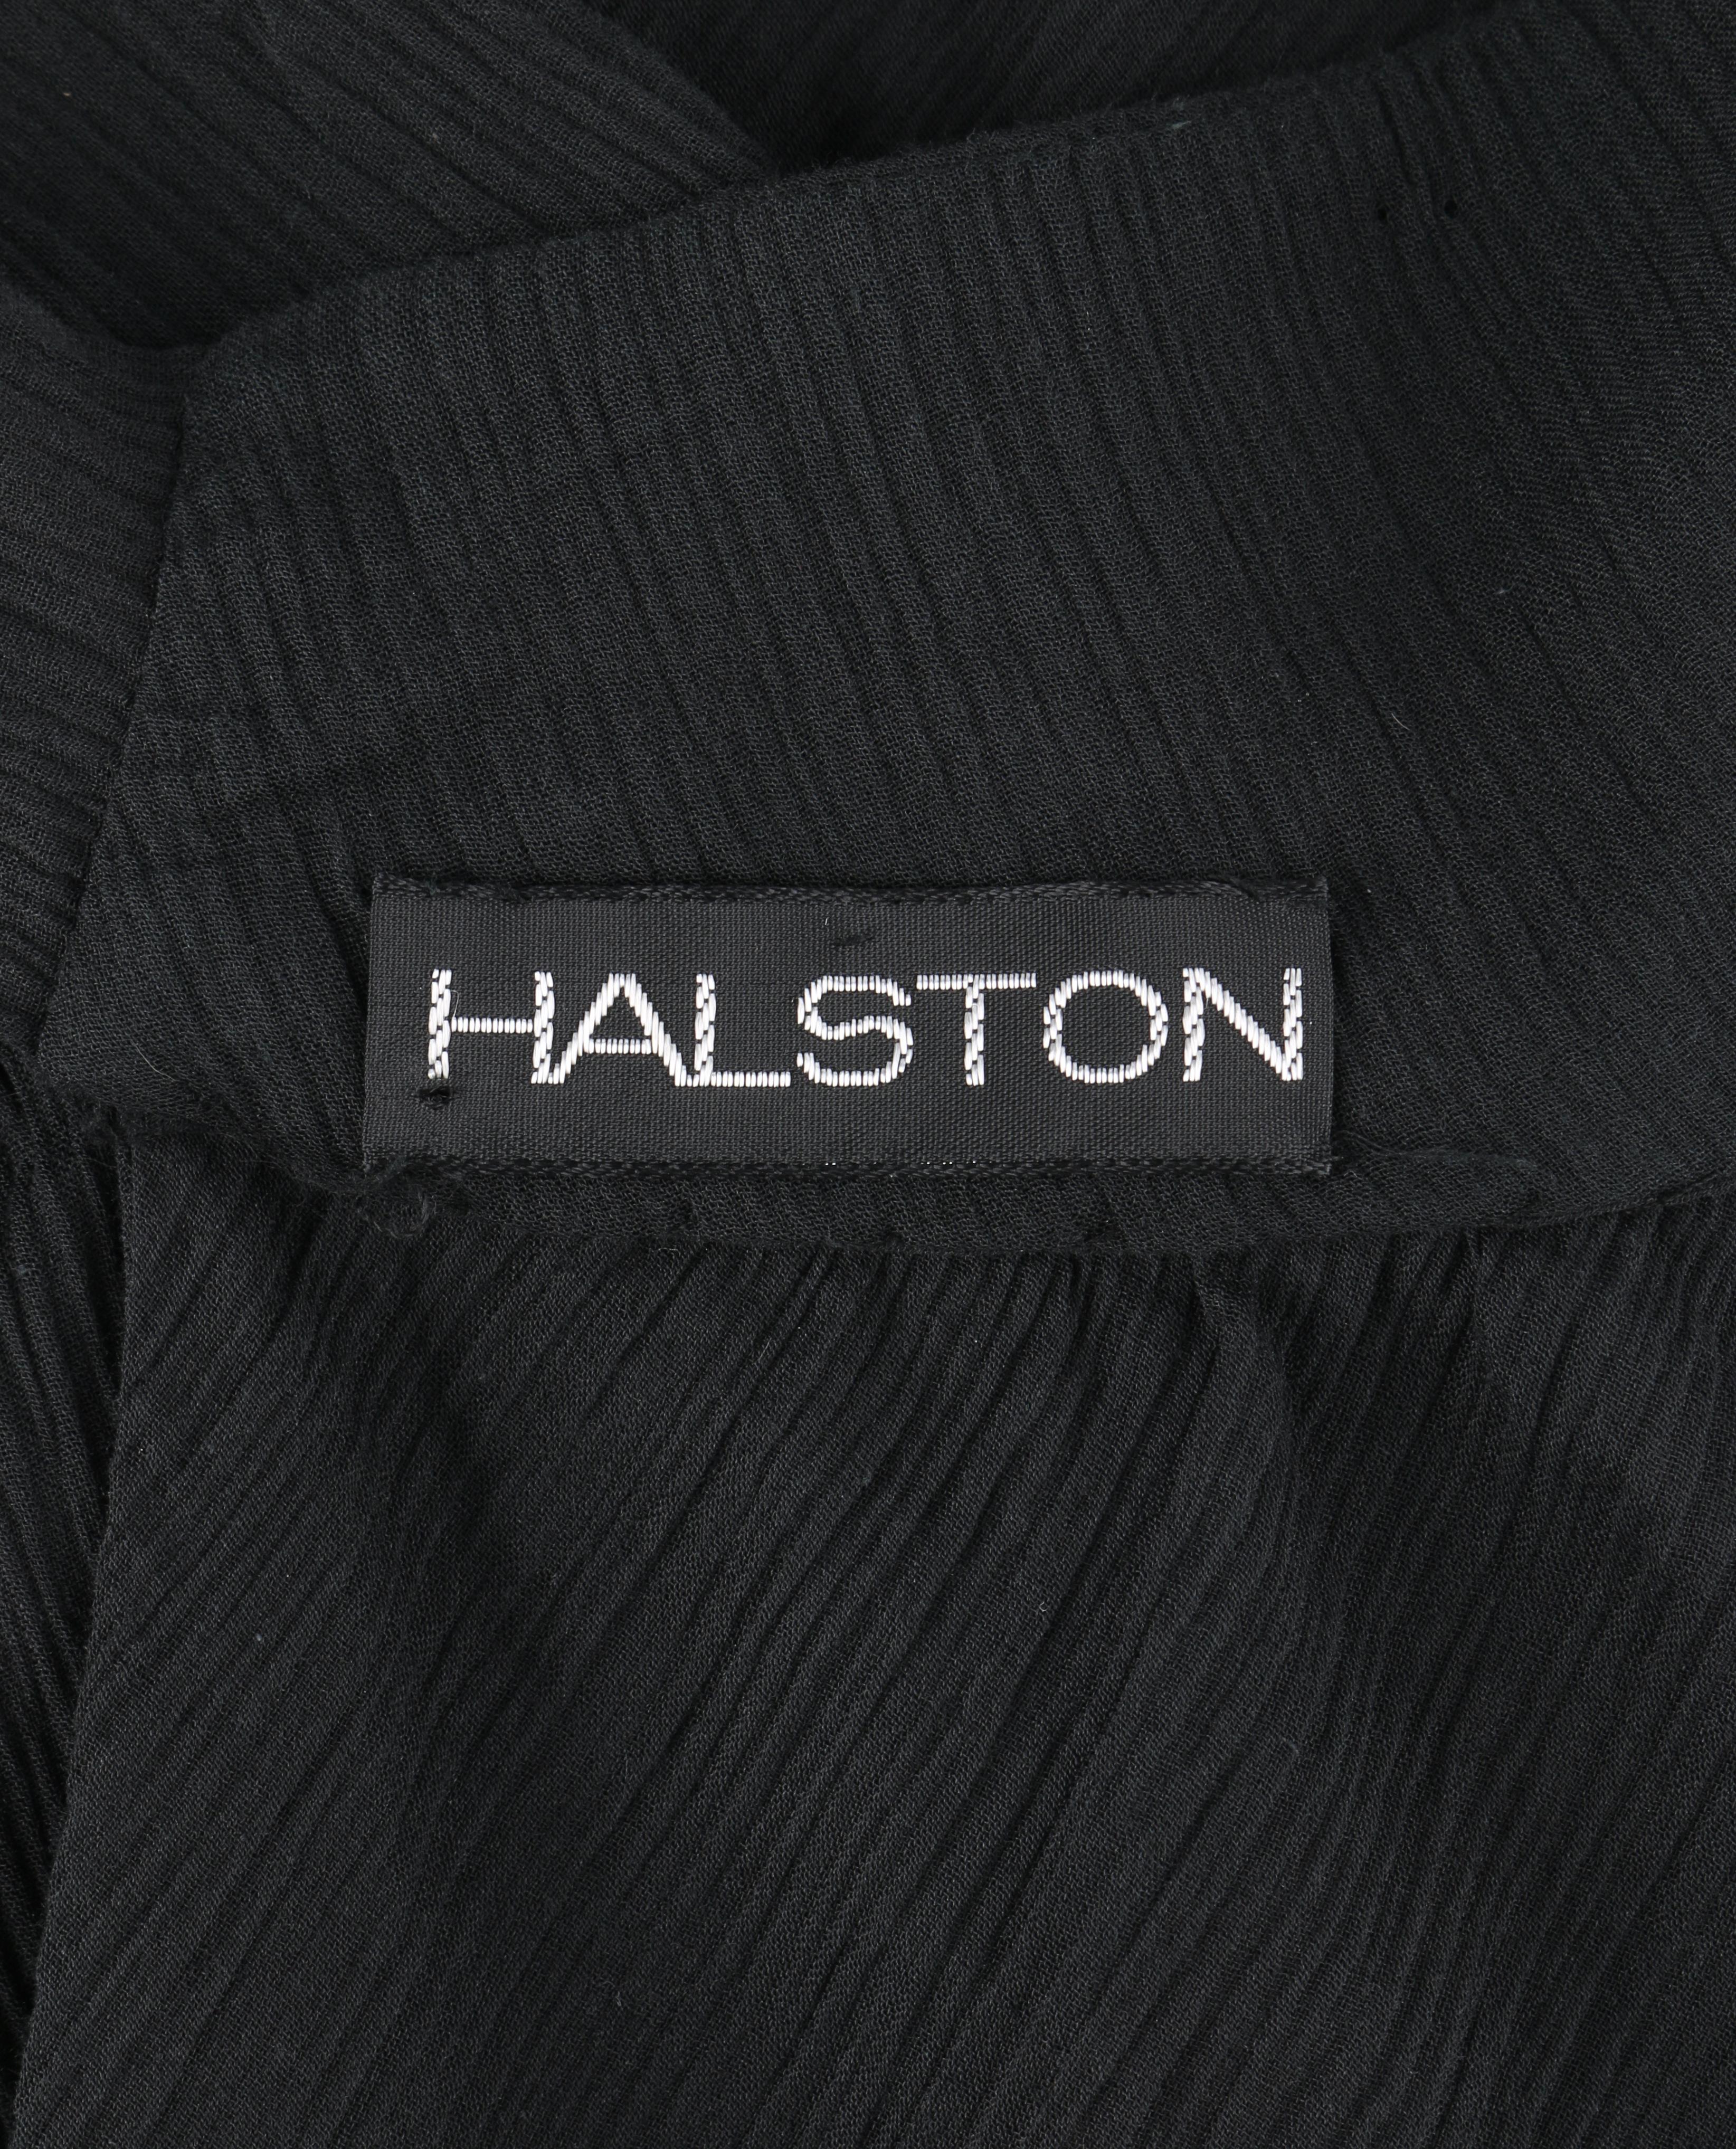 HALSTON c.1970's Black Halter Top Waist Tie Tiered Wrap Tea Length Party Dress 2